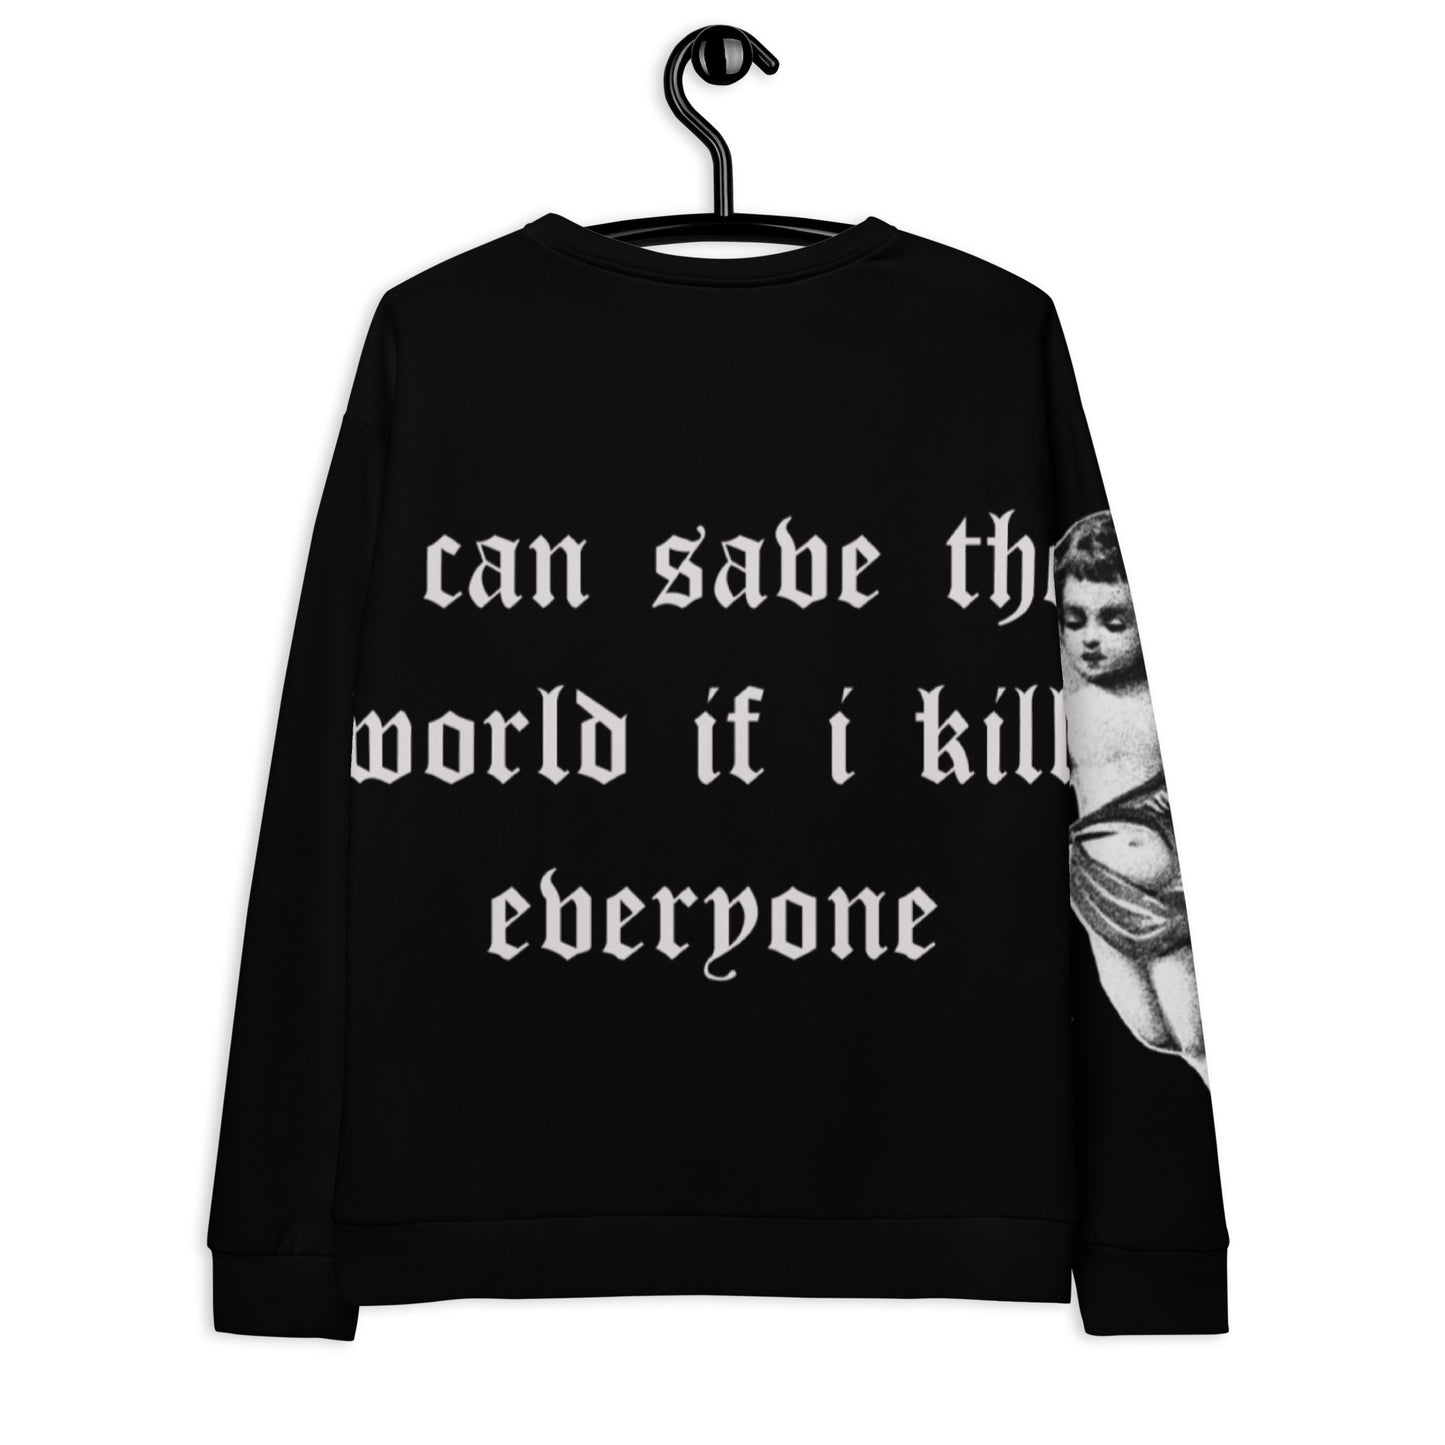 save the world sweatshirt